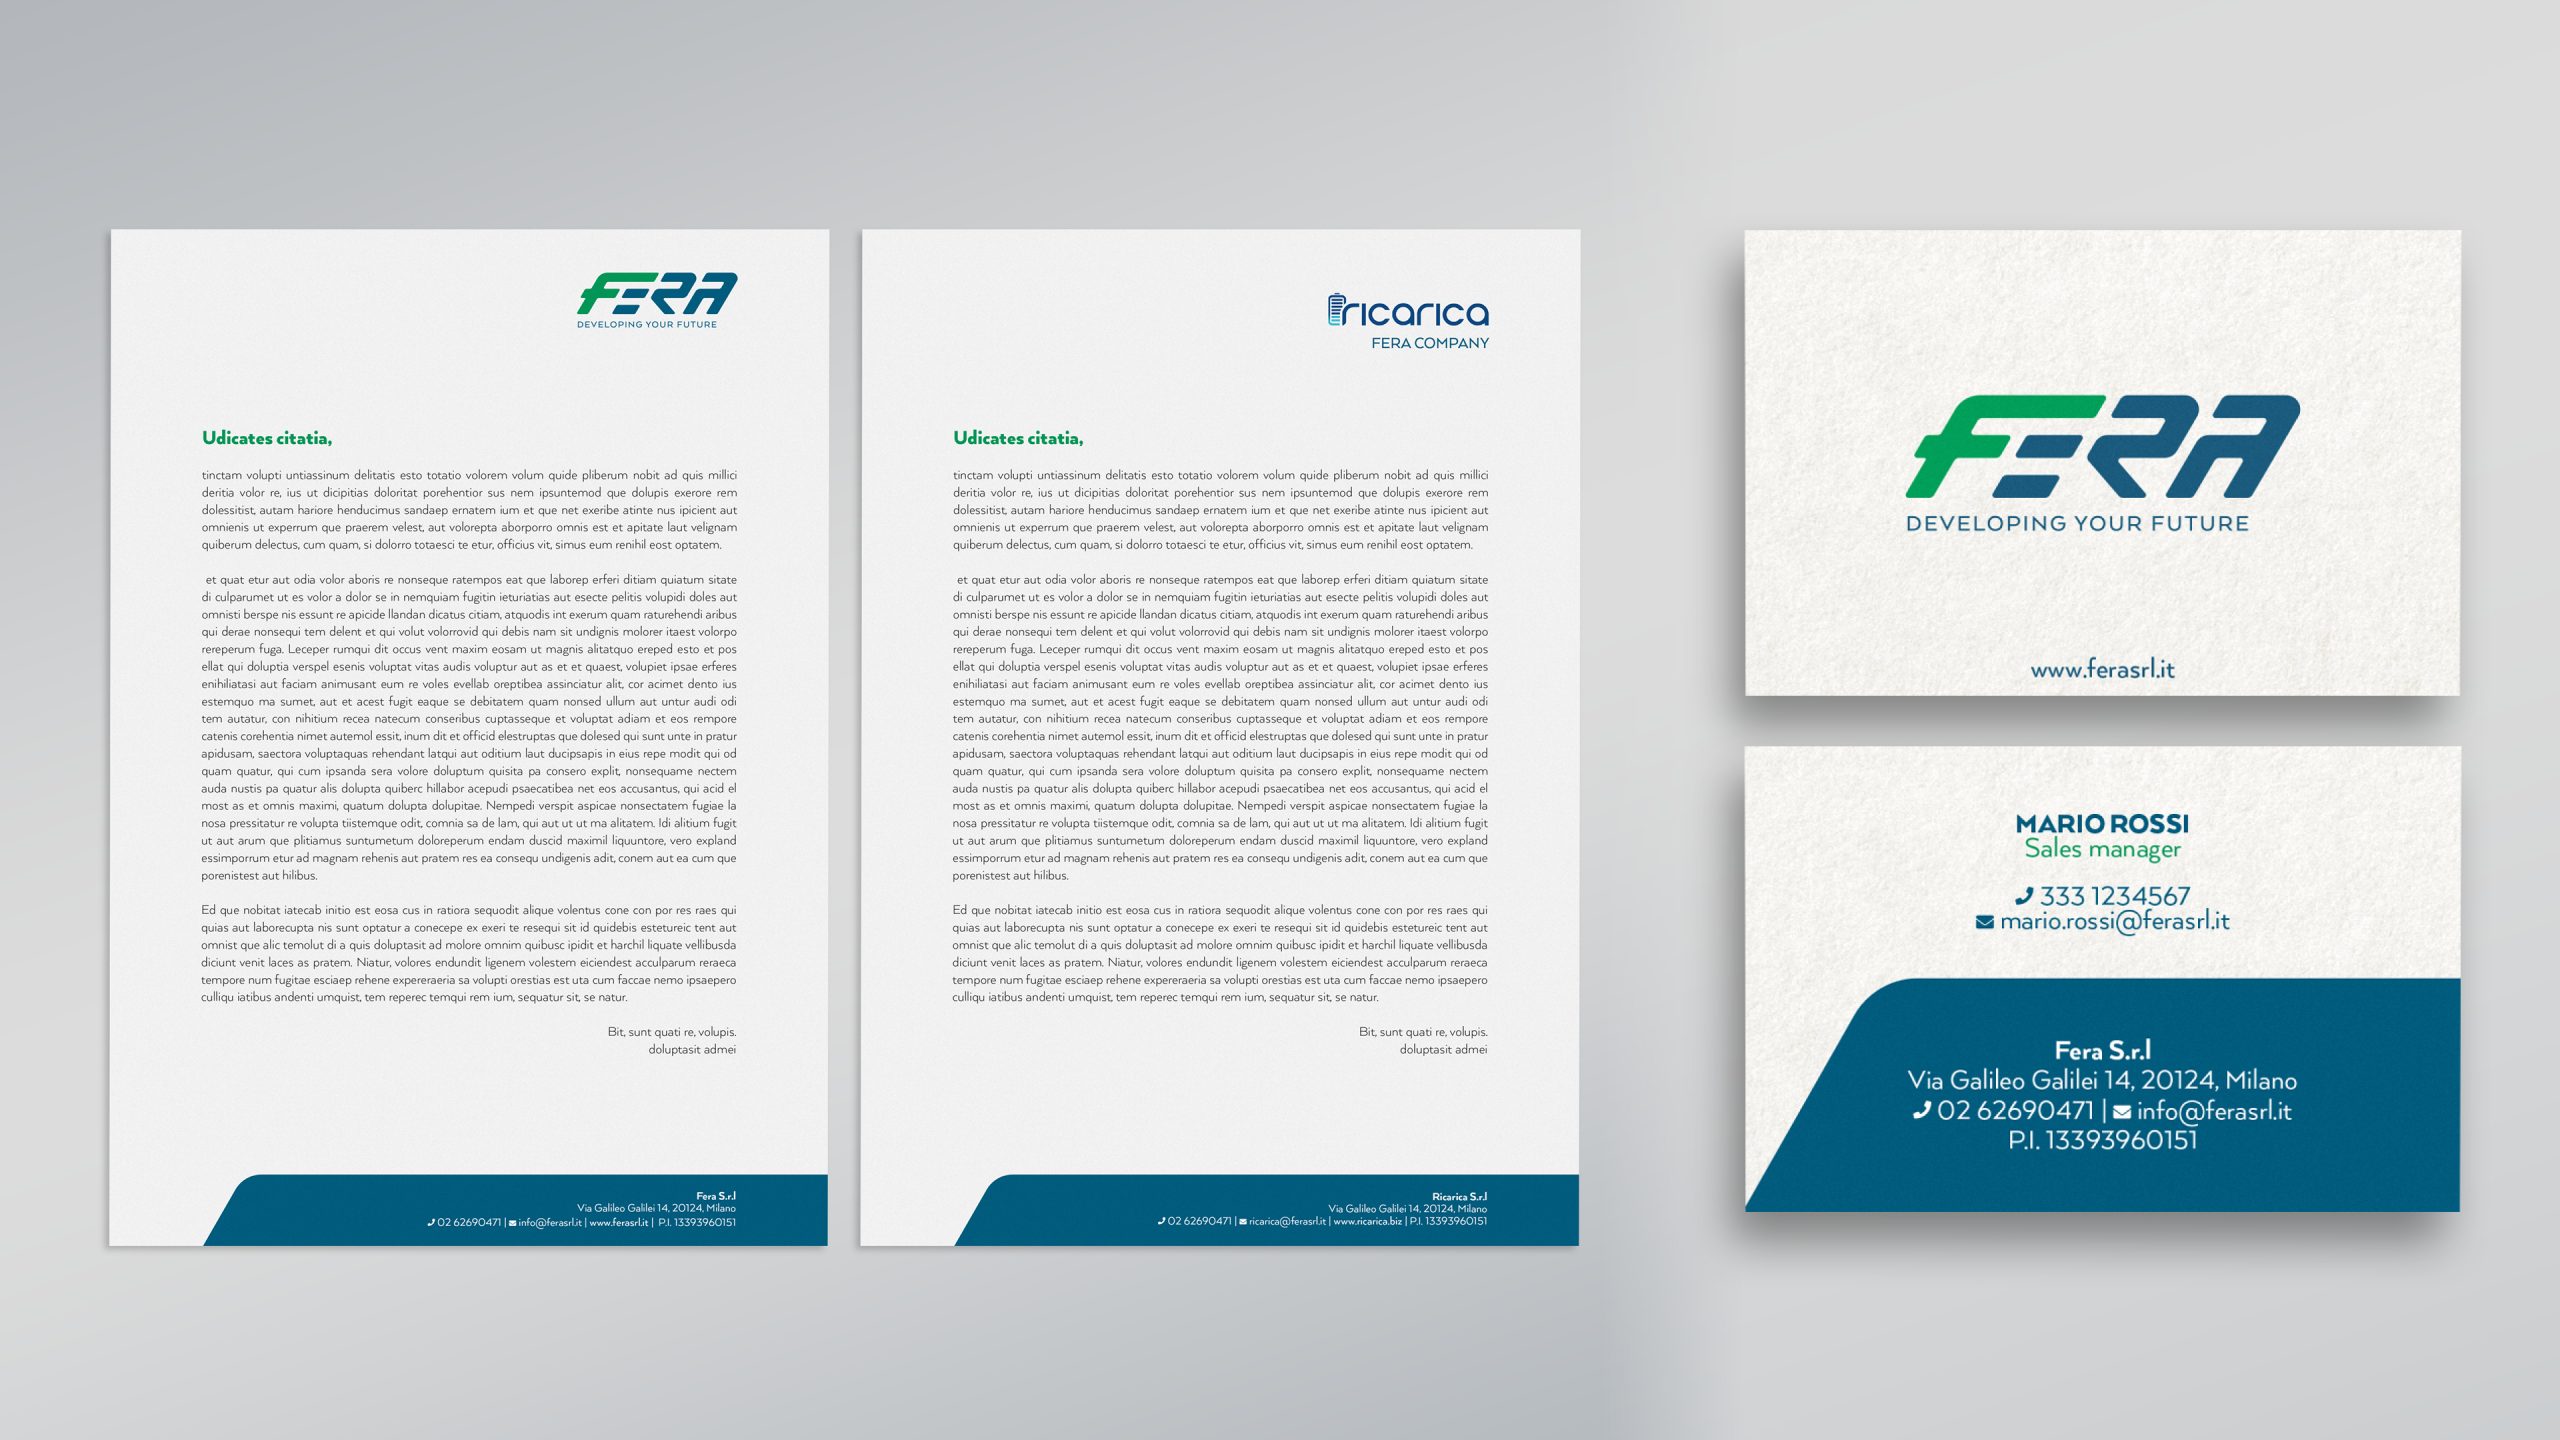 fera headed paper and business card - new logo by daniele portuesi & rosa vecchierelli